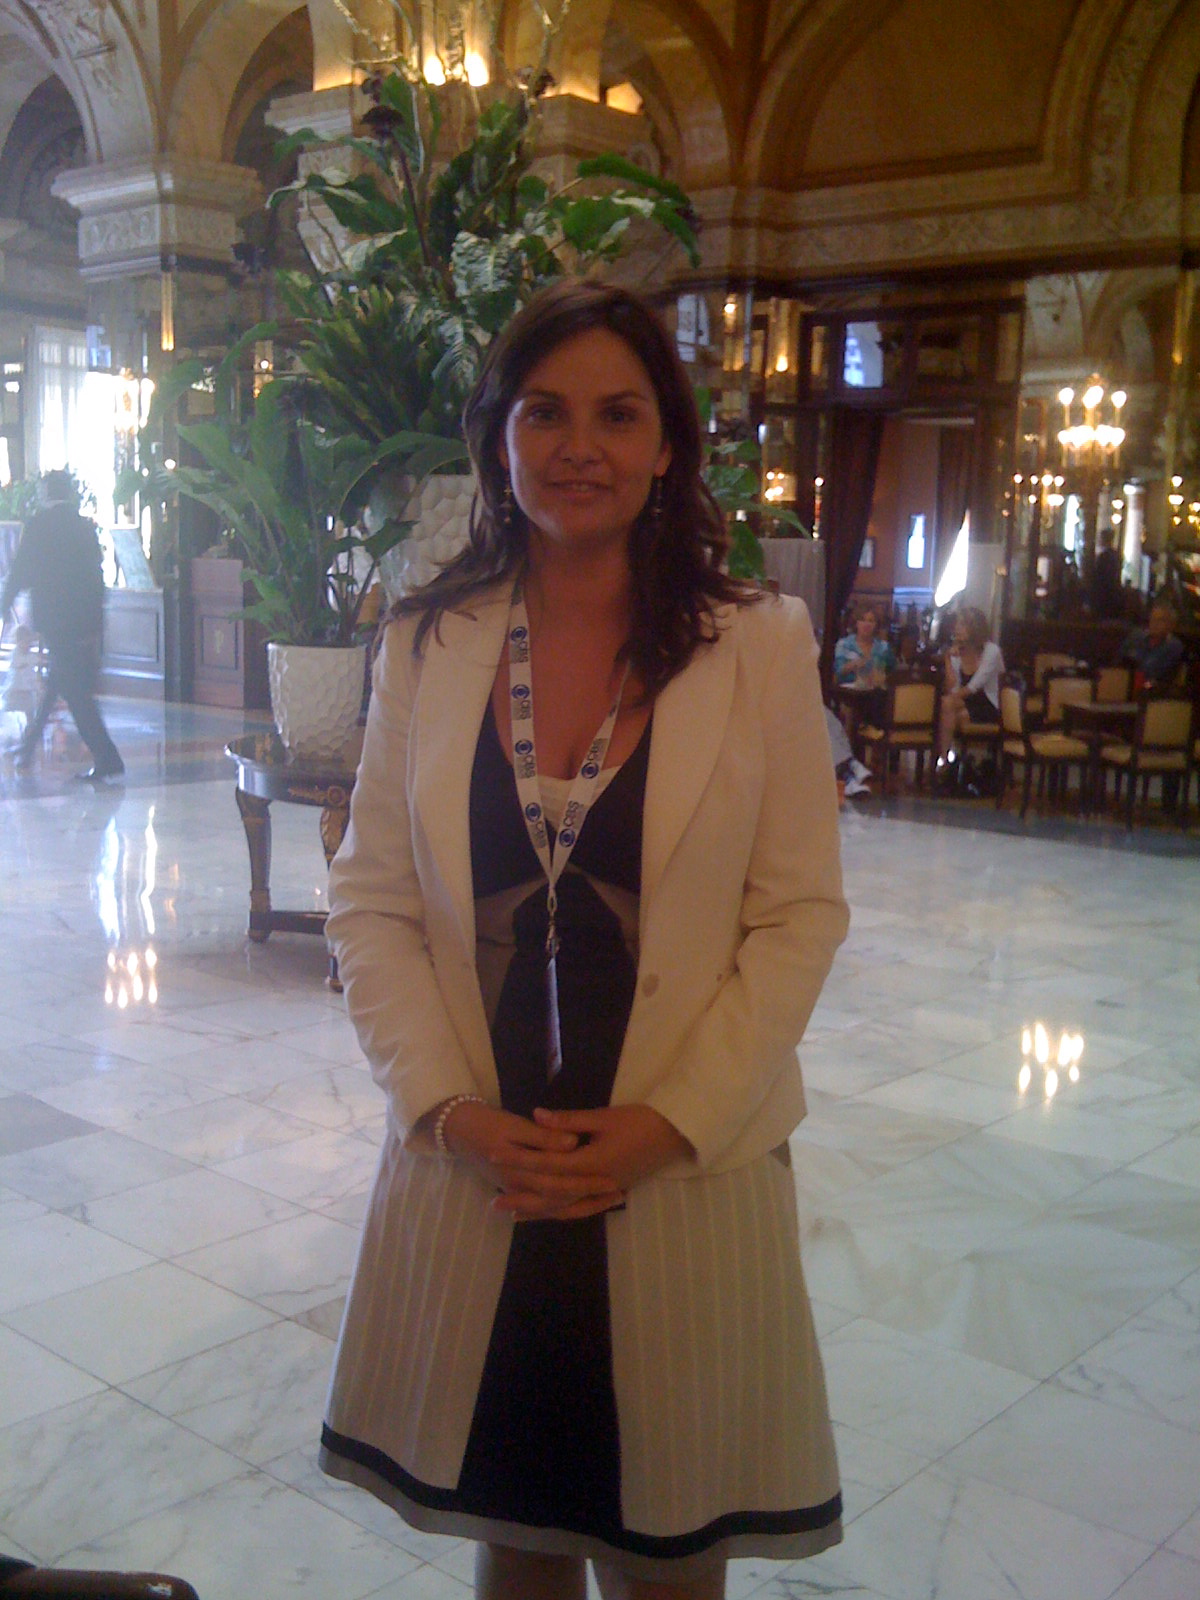 Golden Nymph Awards 2009. Hotel de Paris, Monte Carlo. Best Actress Nomination.